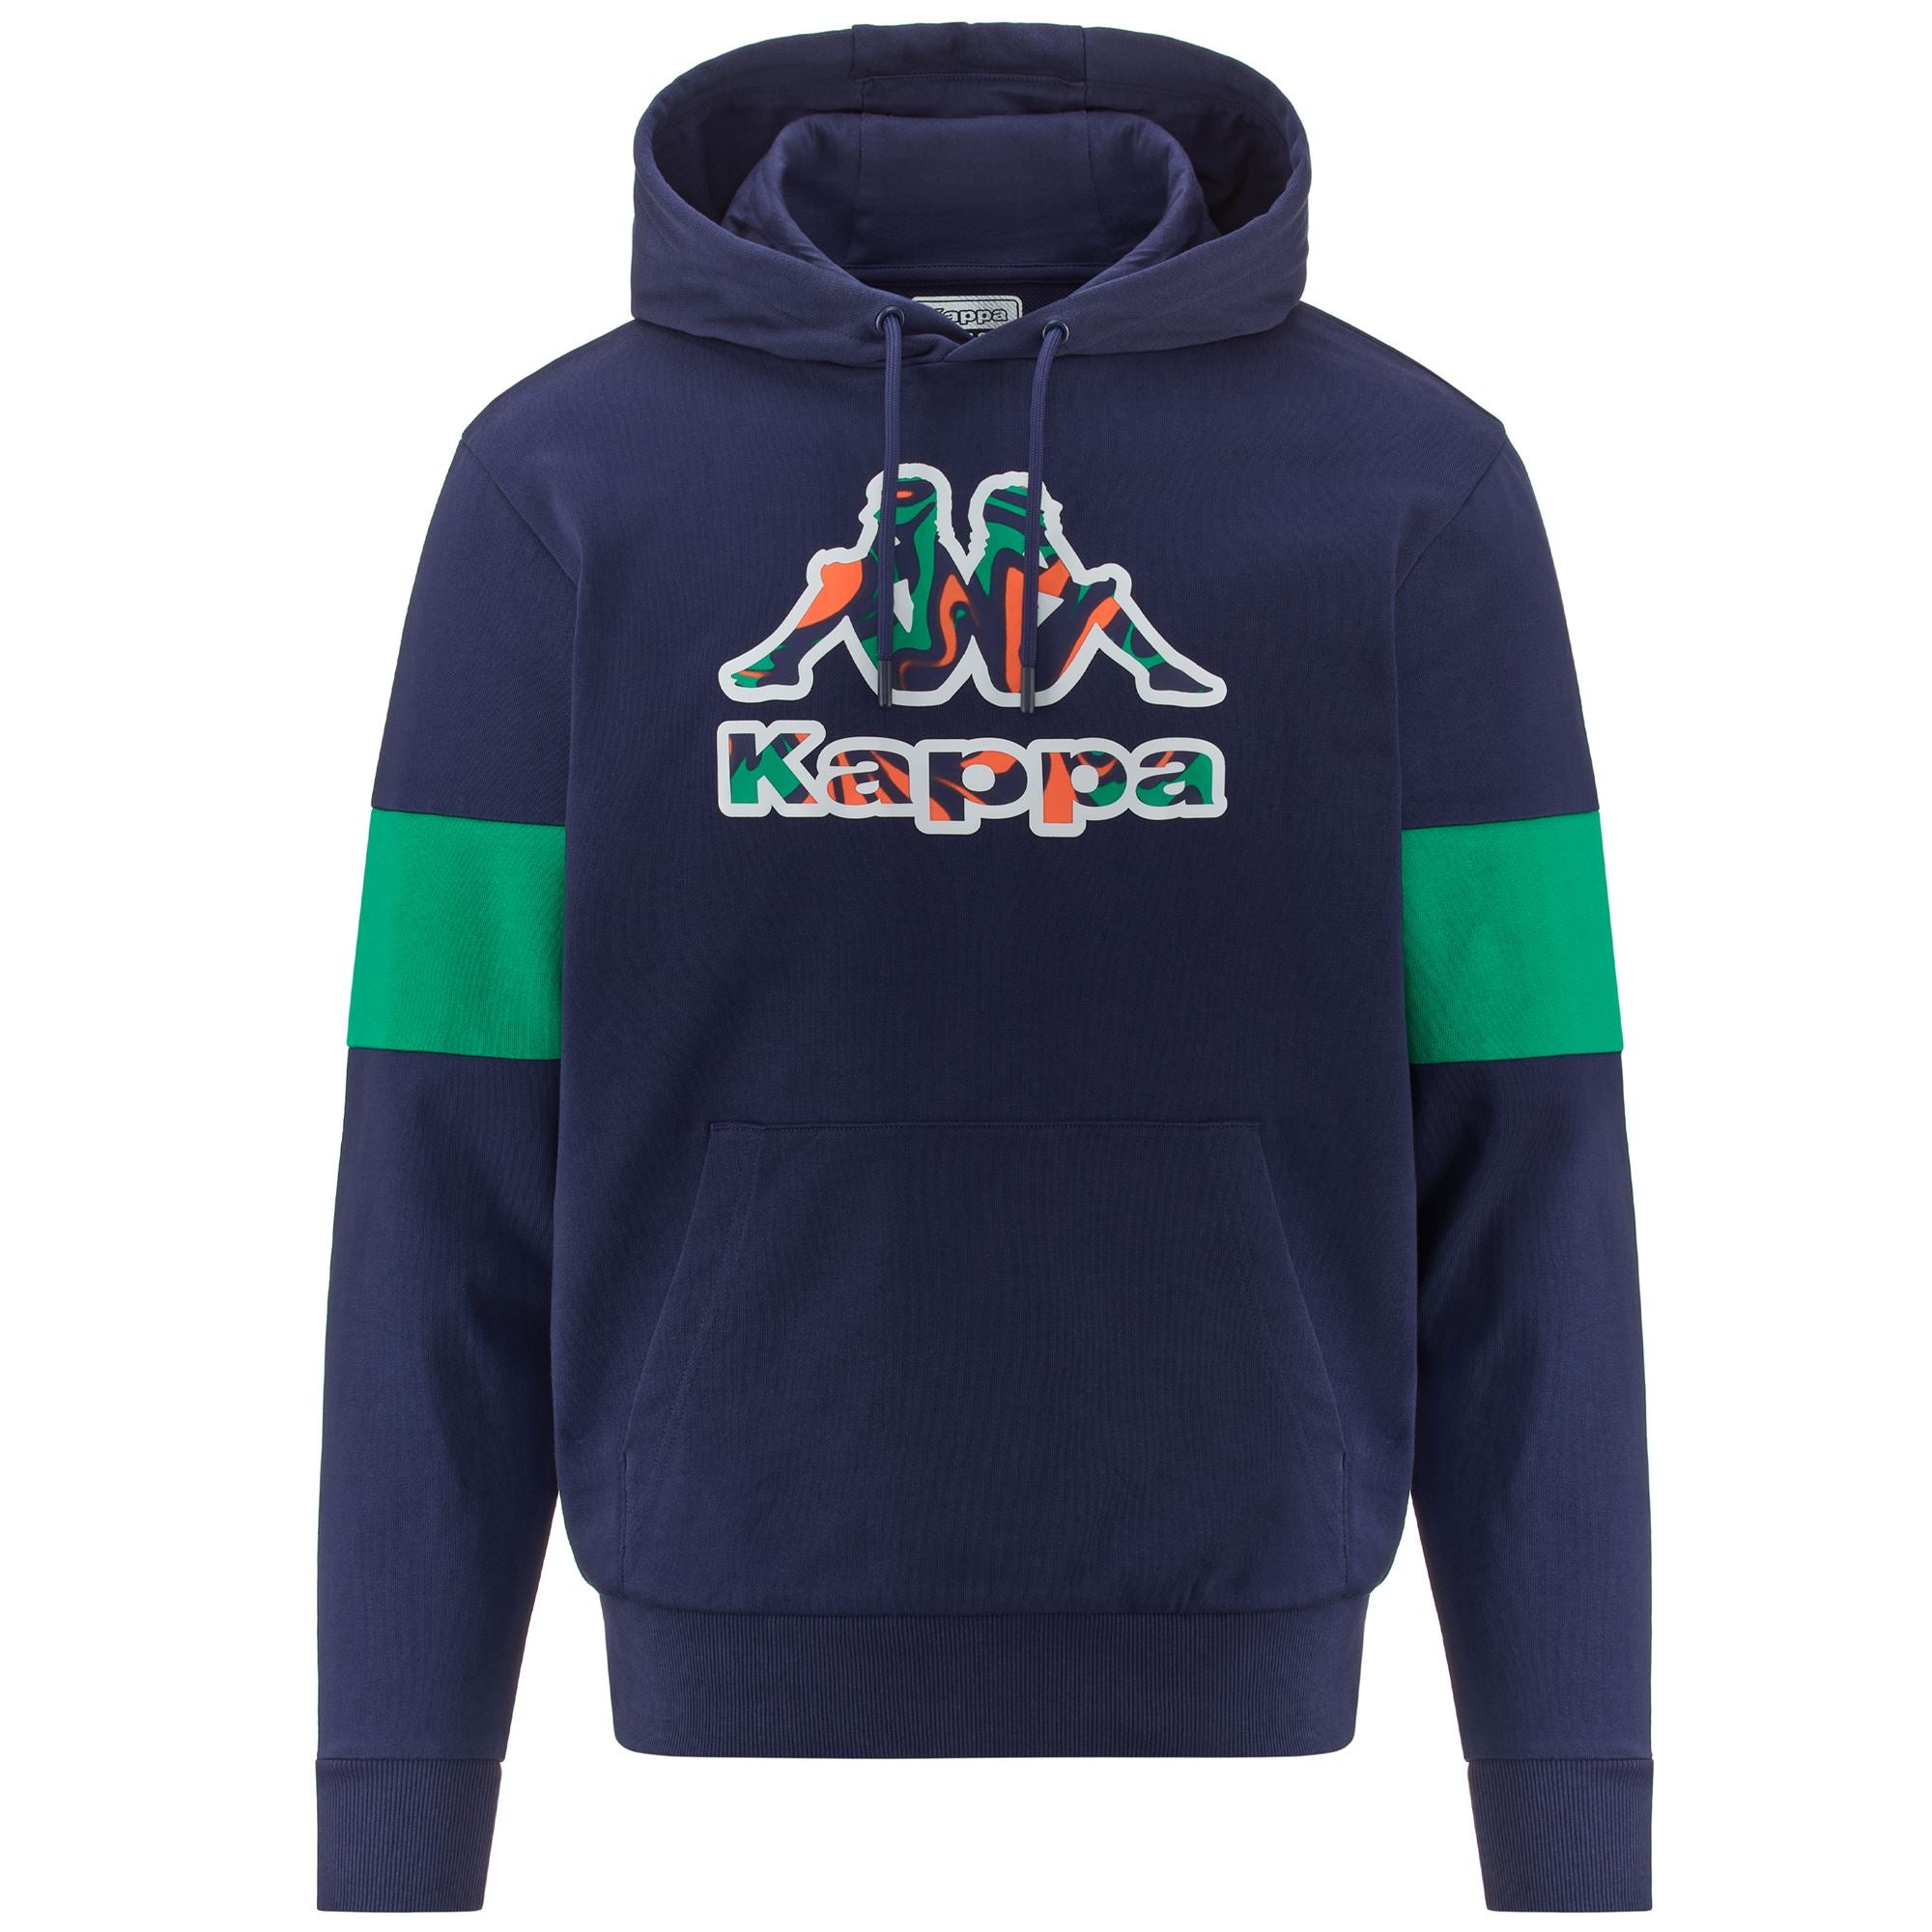 Men's Kappa hoodies and sweaters – Page 3 – Kappa.com